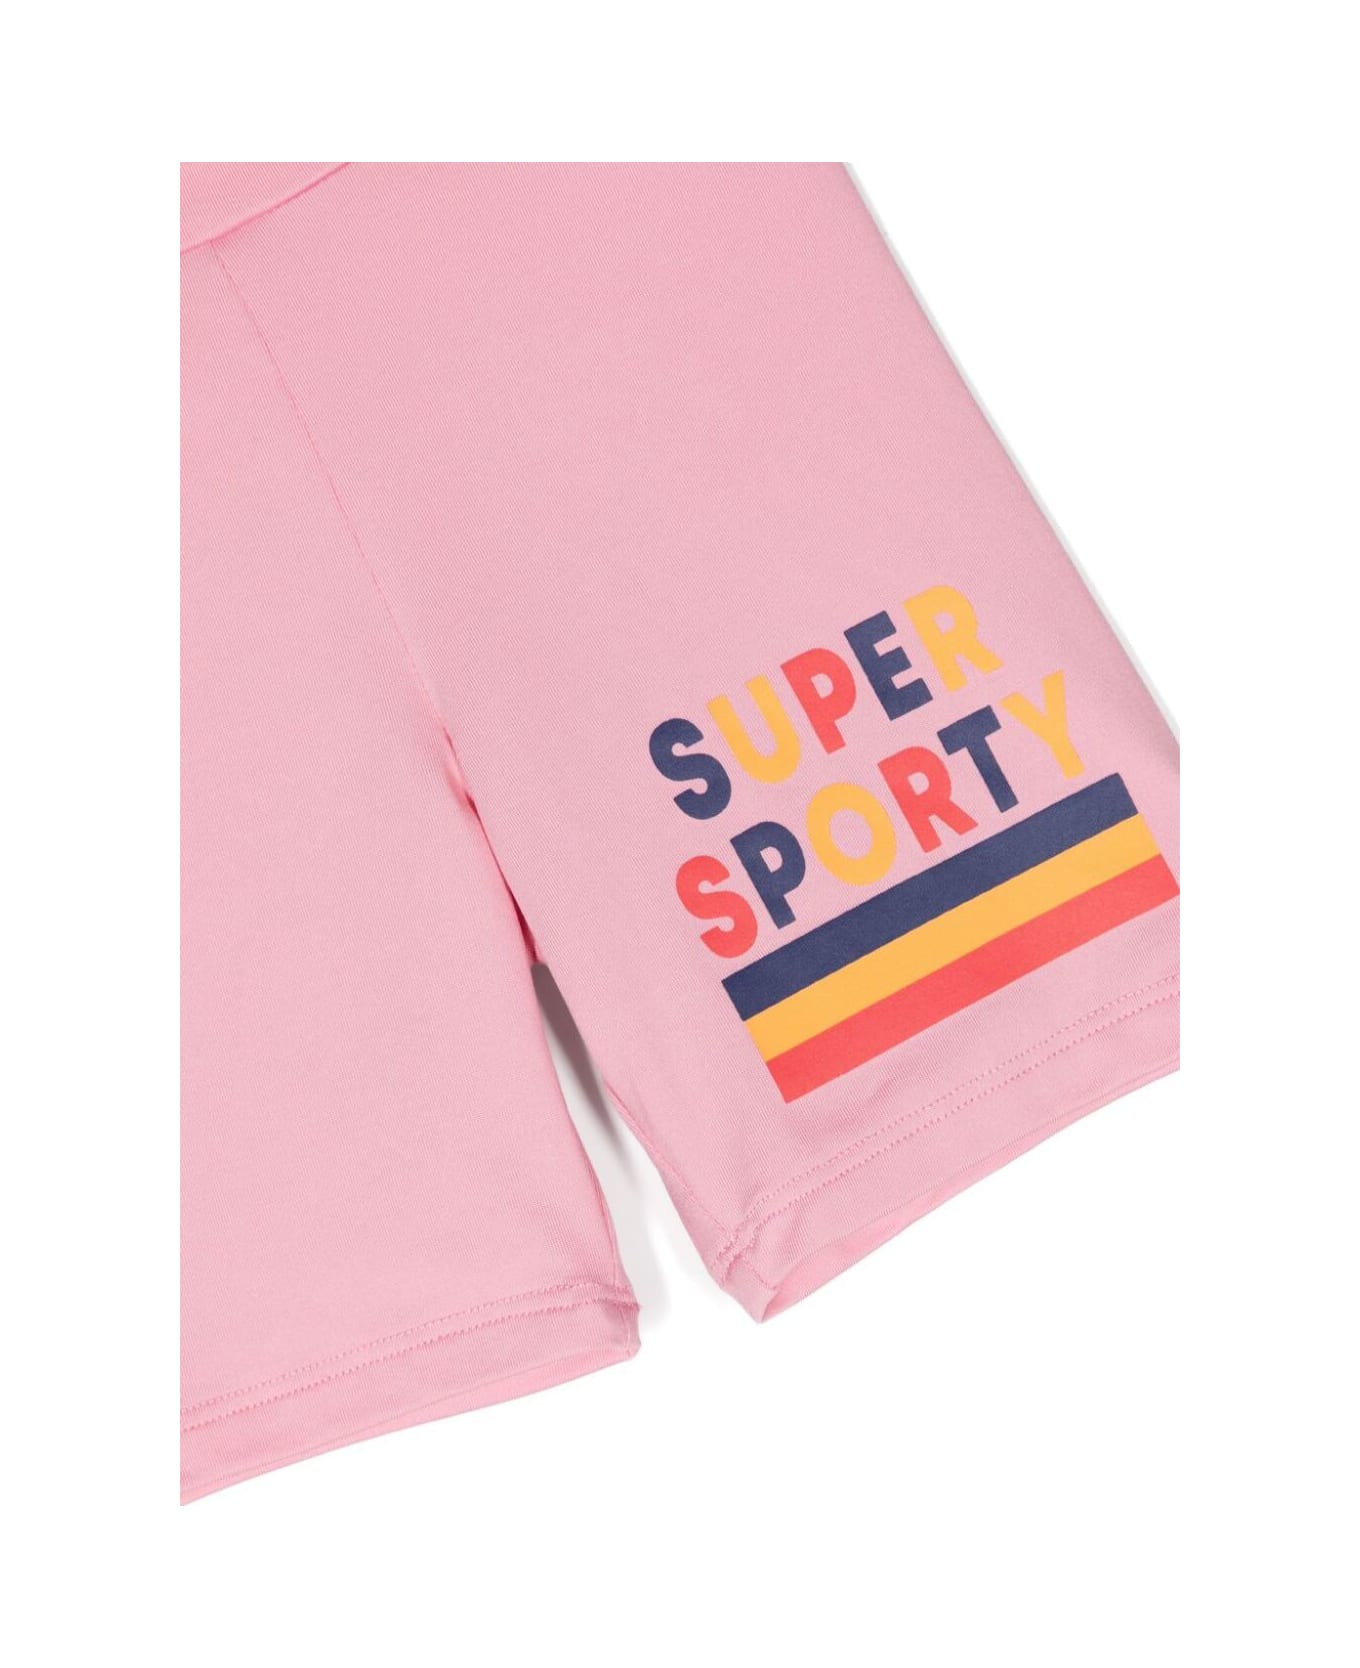 Mini Rodini Super Sporty Bike Shorts - Pink ボトムス